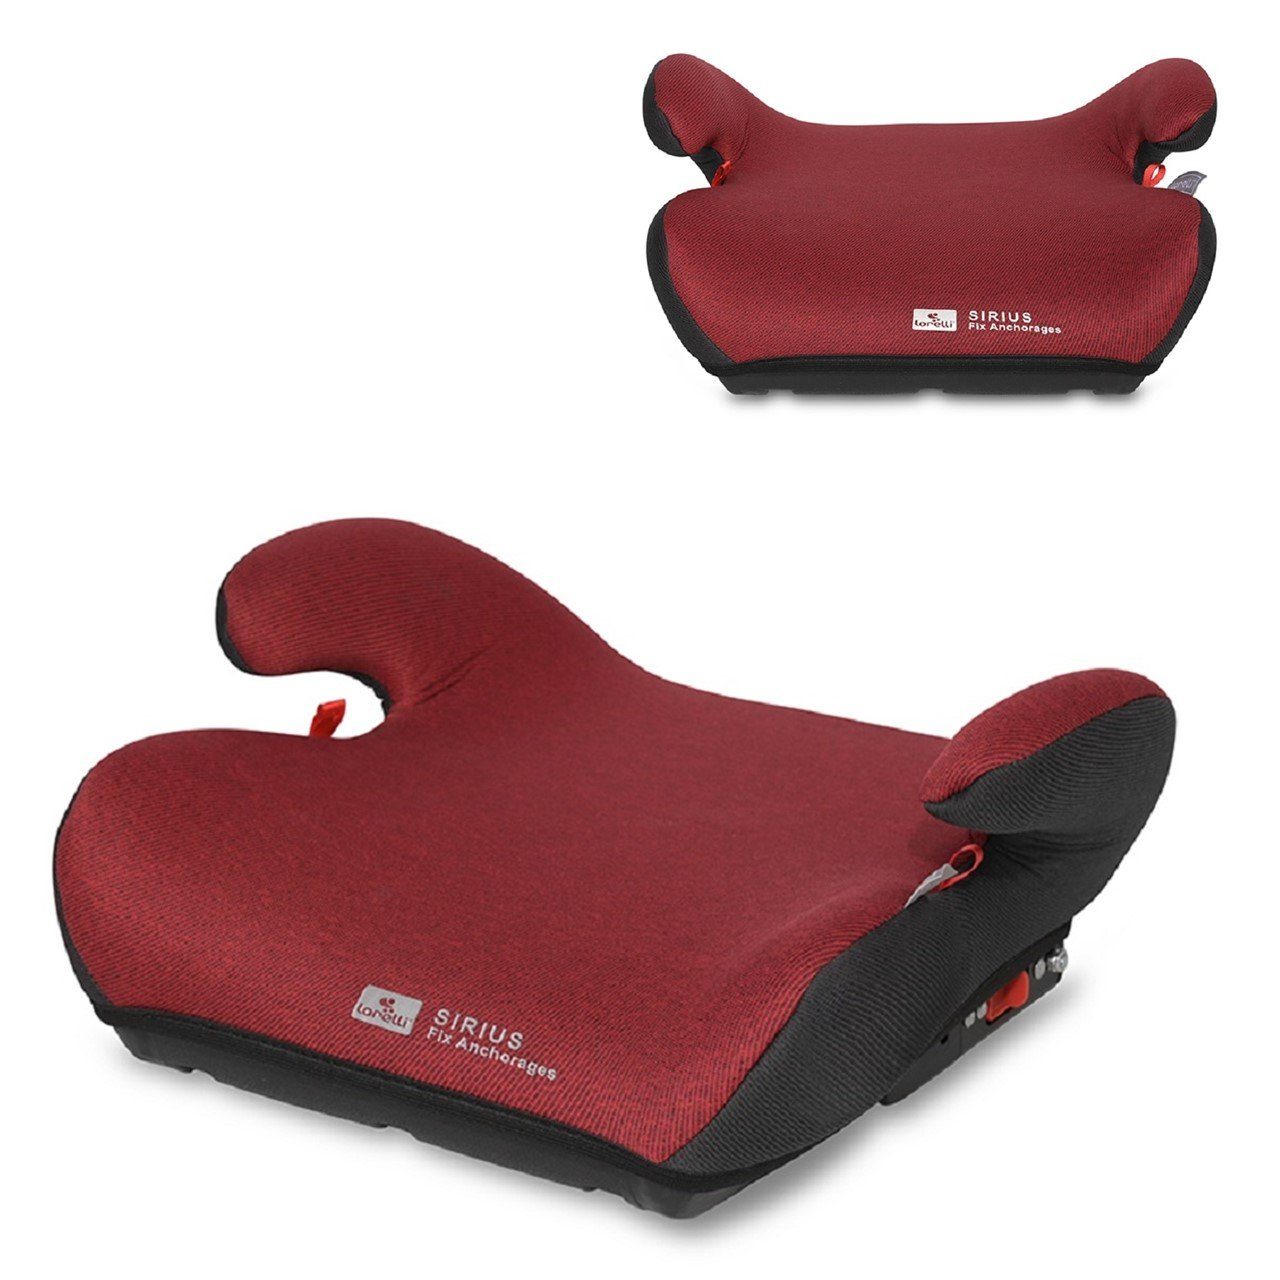 Lorelli Kindersitzerhöhung Sitzerhöhung Sirius Gruppe 3, bis: 36 kg, (22 - 36kg) Isofix Bezug abnehmbar Armlehne rot